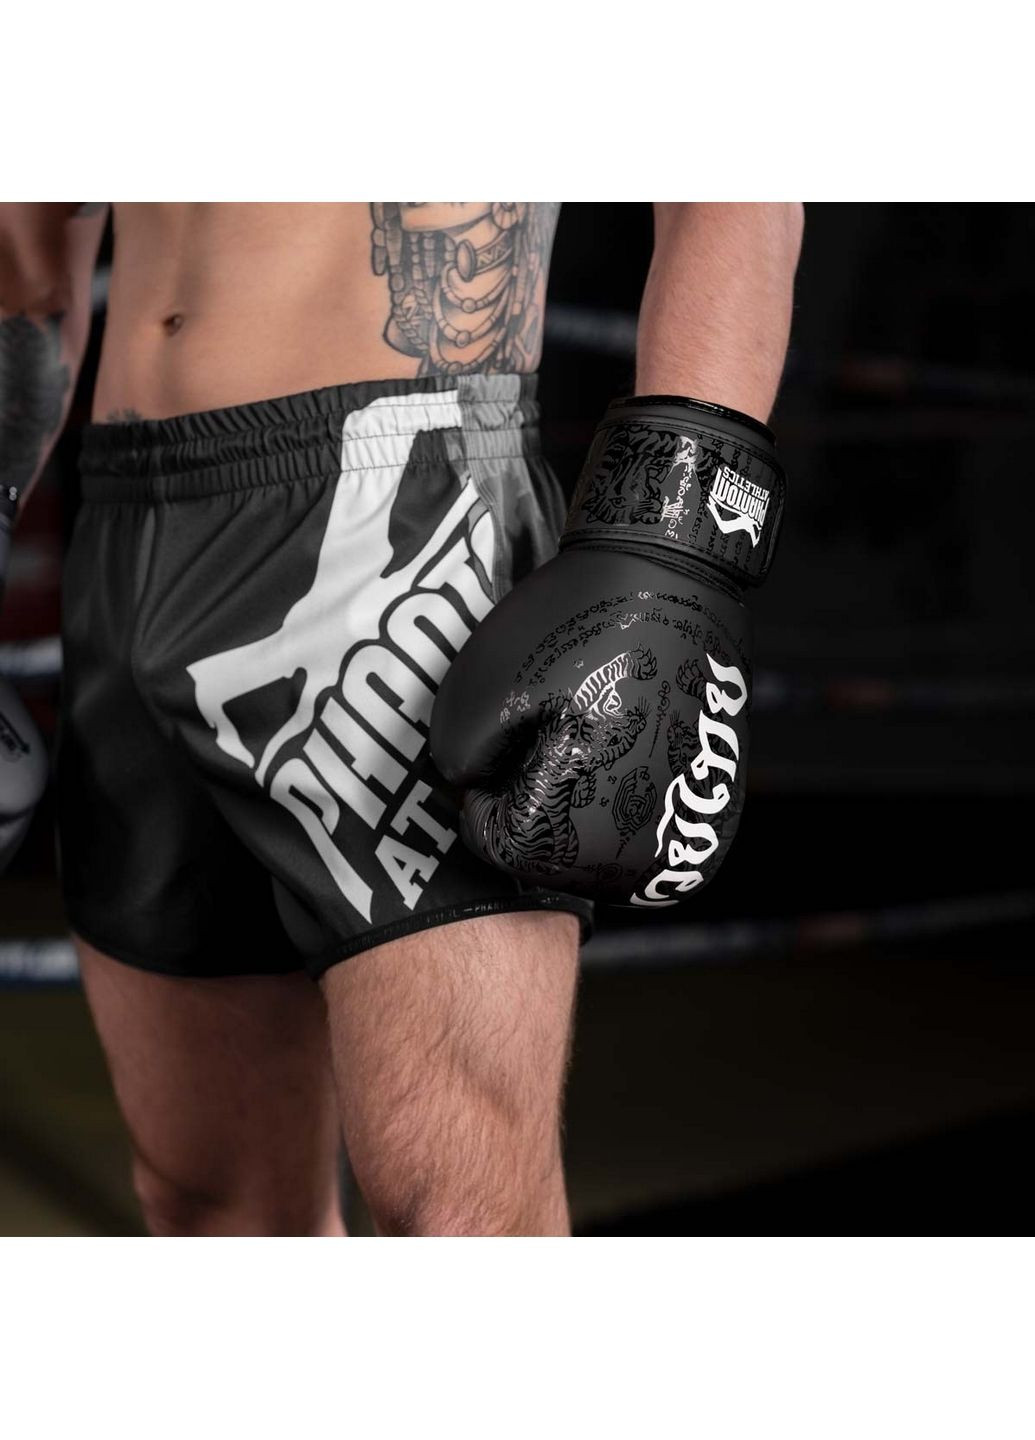 Боксерские перчатки Muay Thai Phantom (279321574)